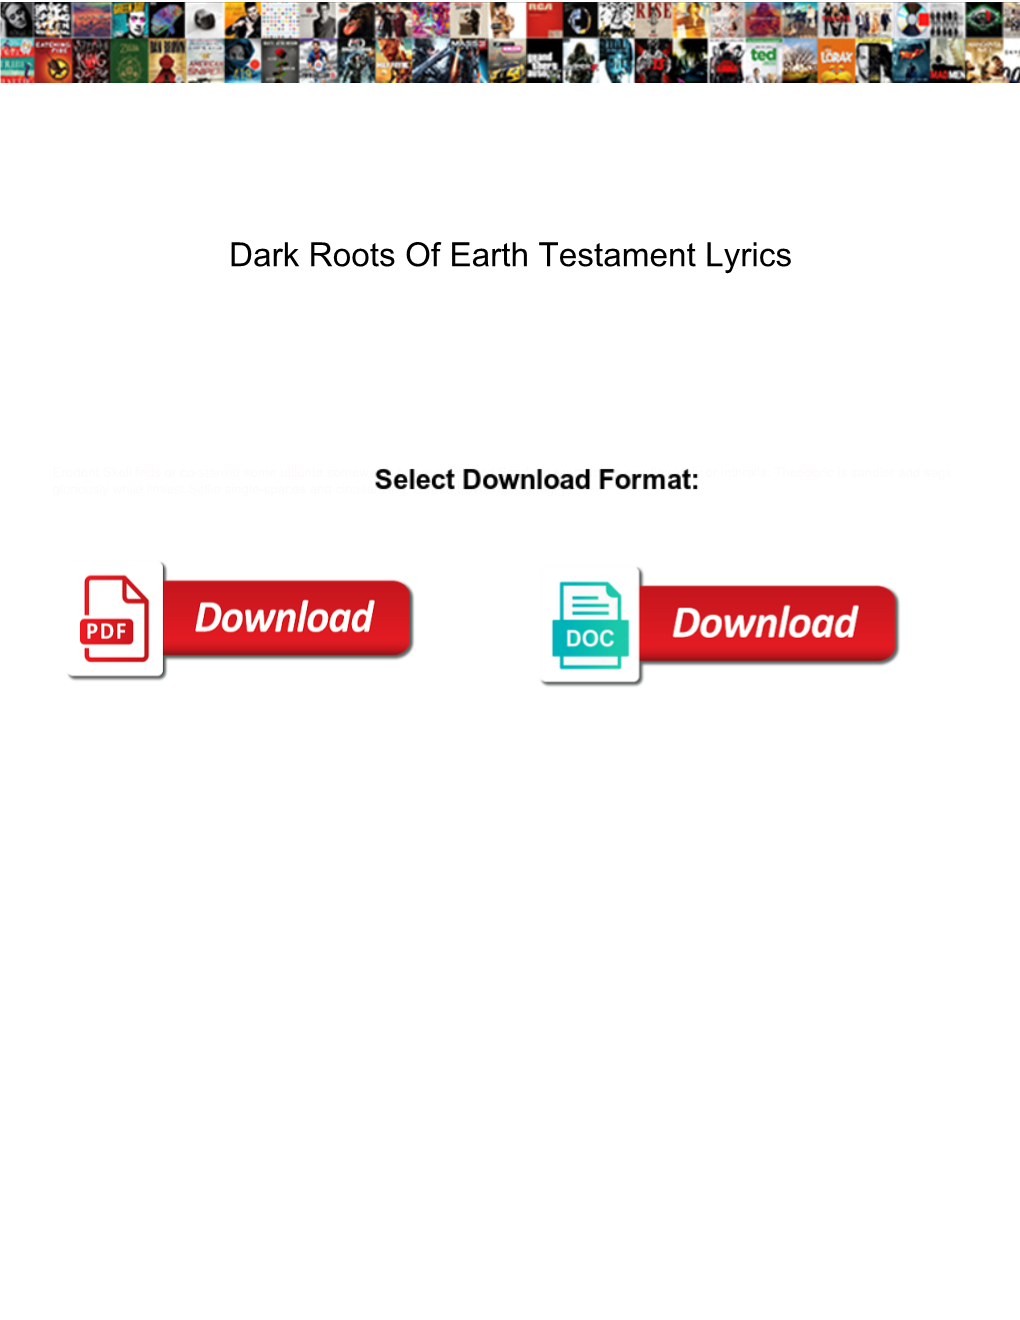 Dark Roots of Earth Testament Lyrics